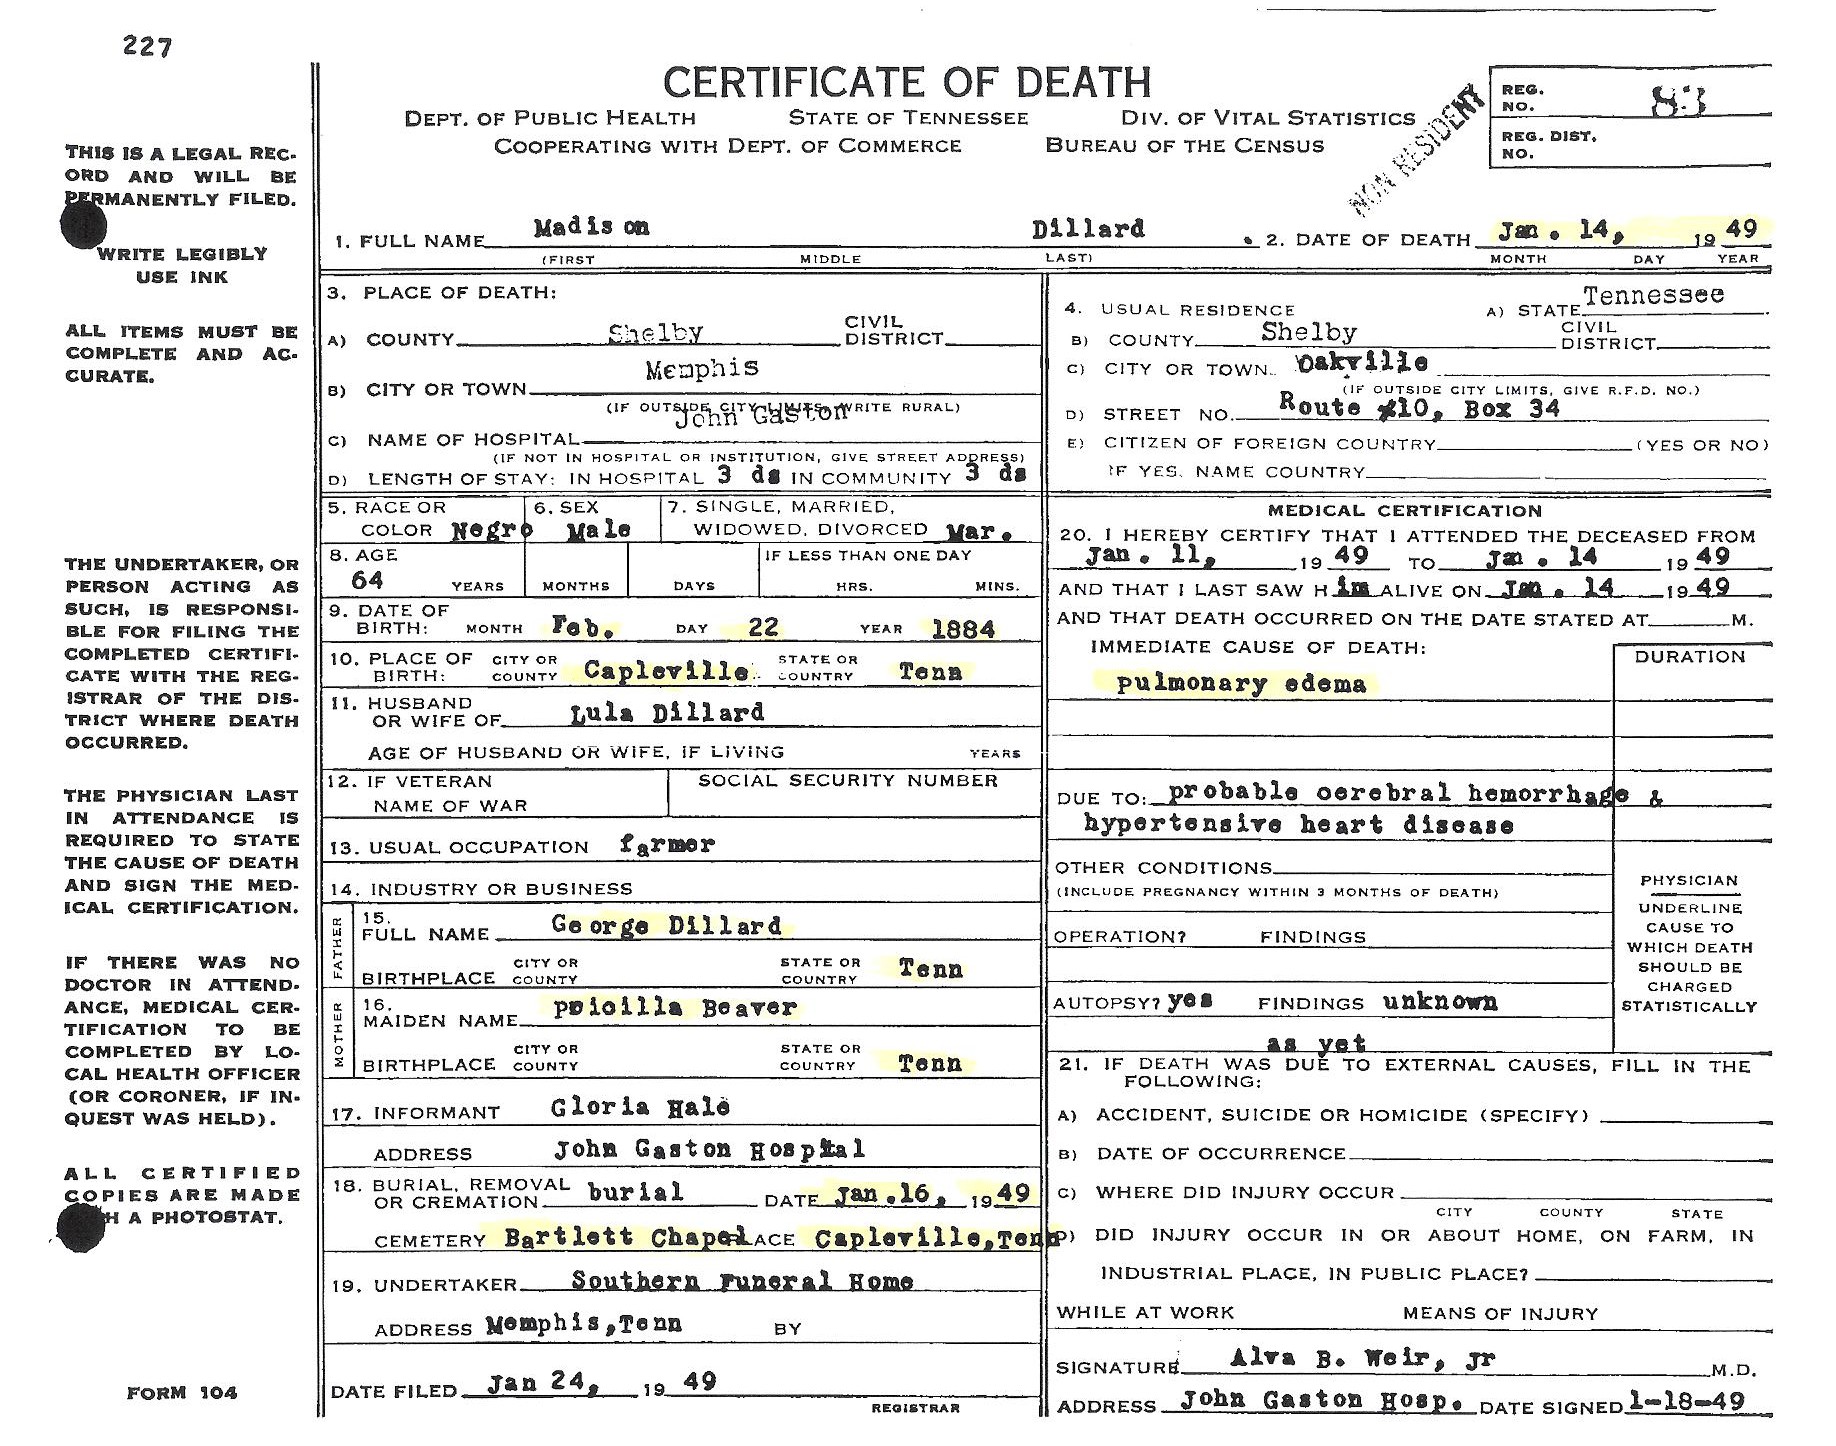 Madison Dillard's Death Certificate